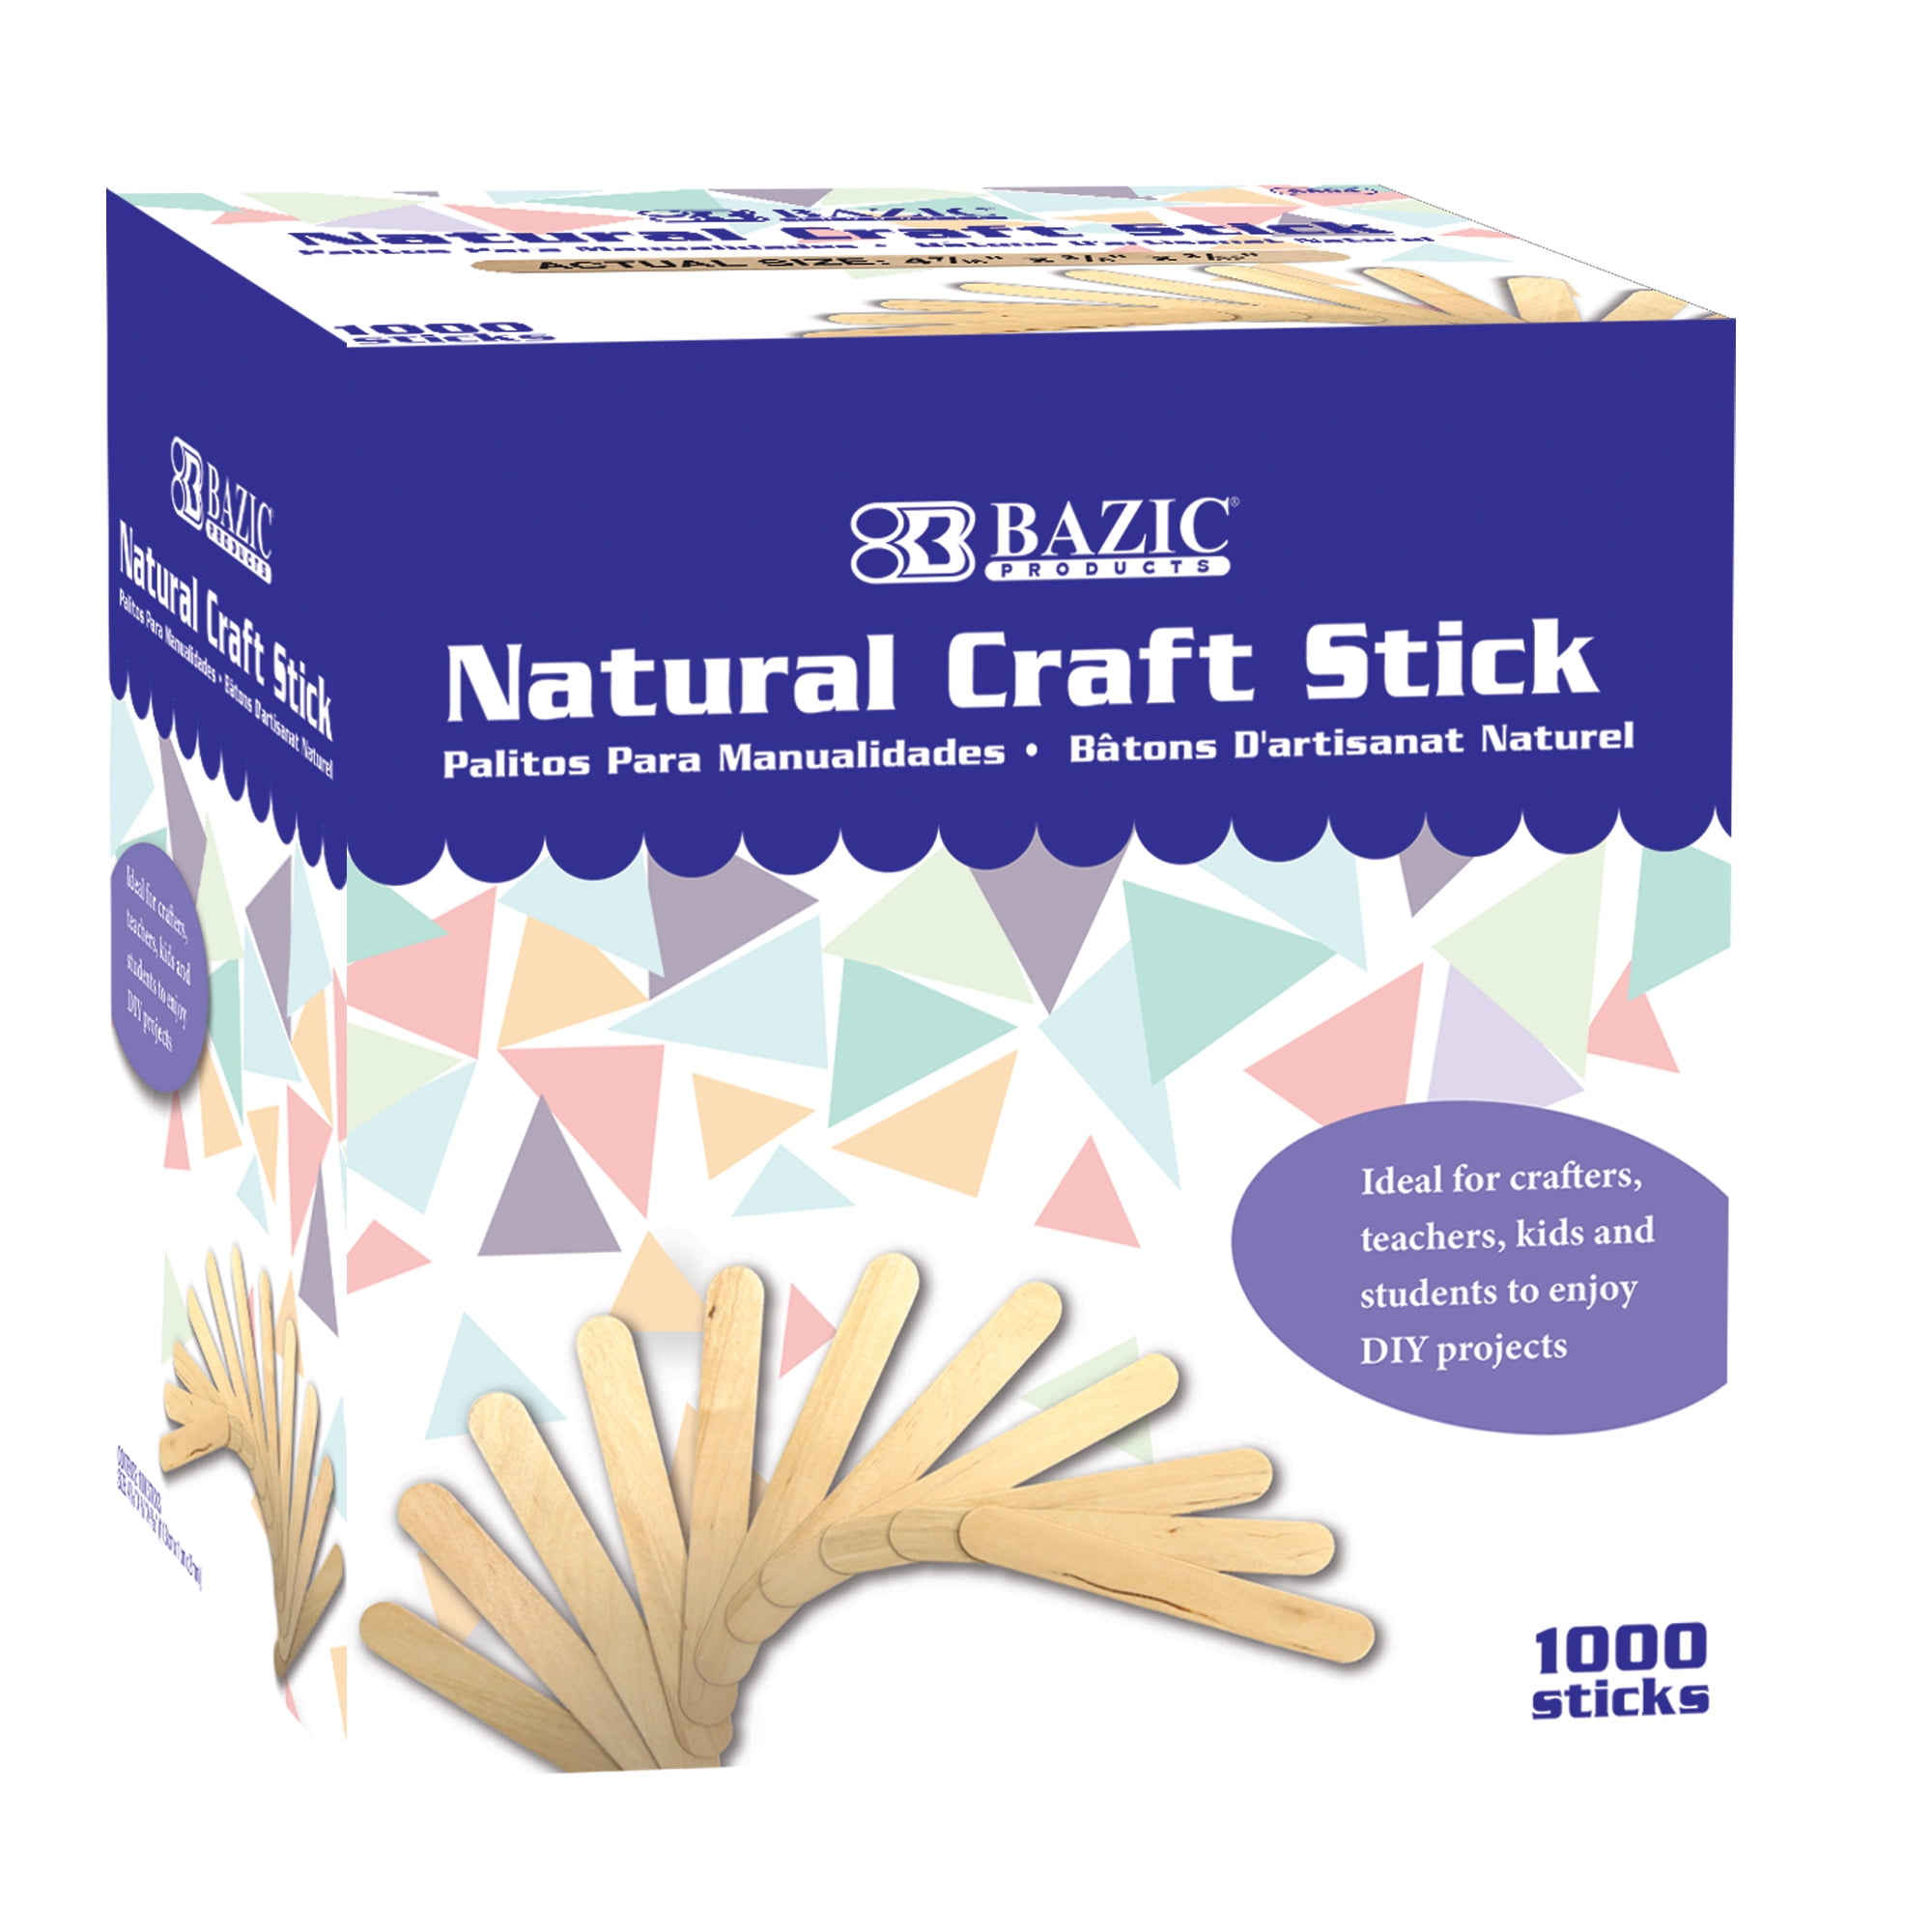 Jumbo Craft Sticks 5-7/8 X 3/4 inch 75 Pieces